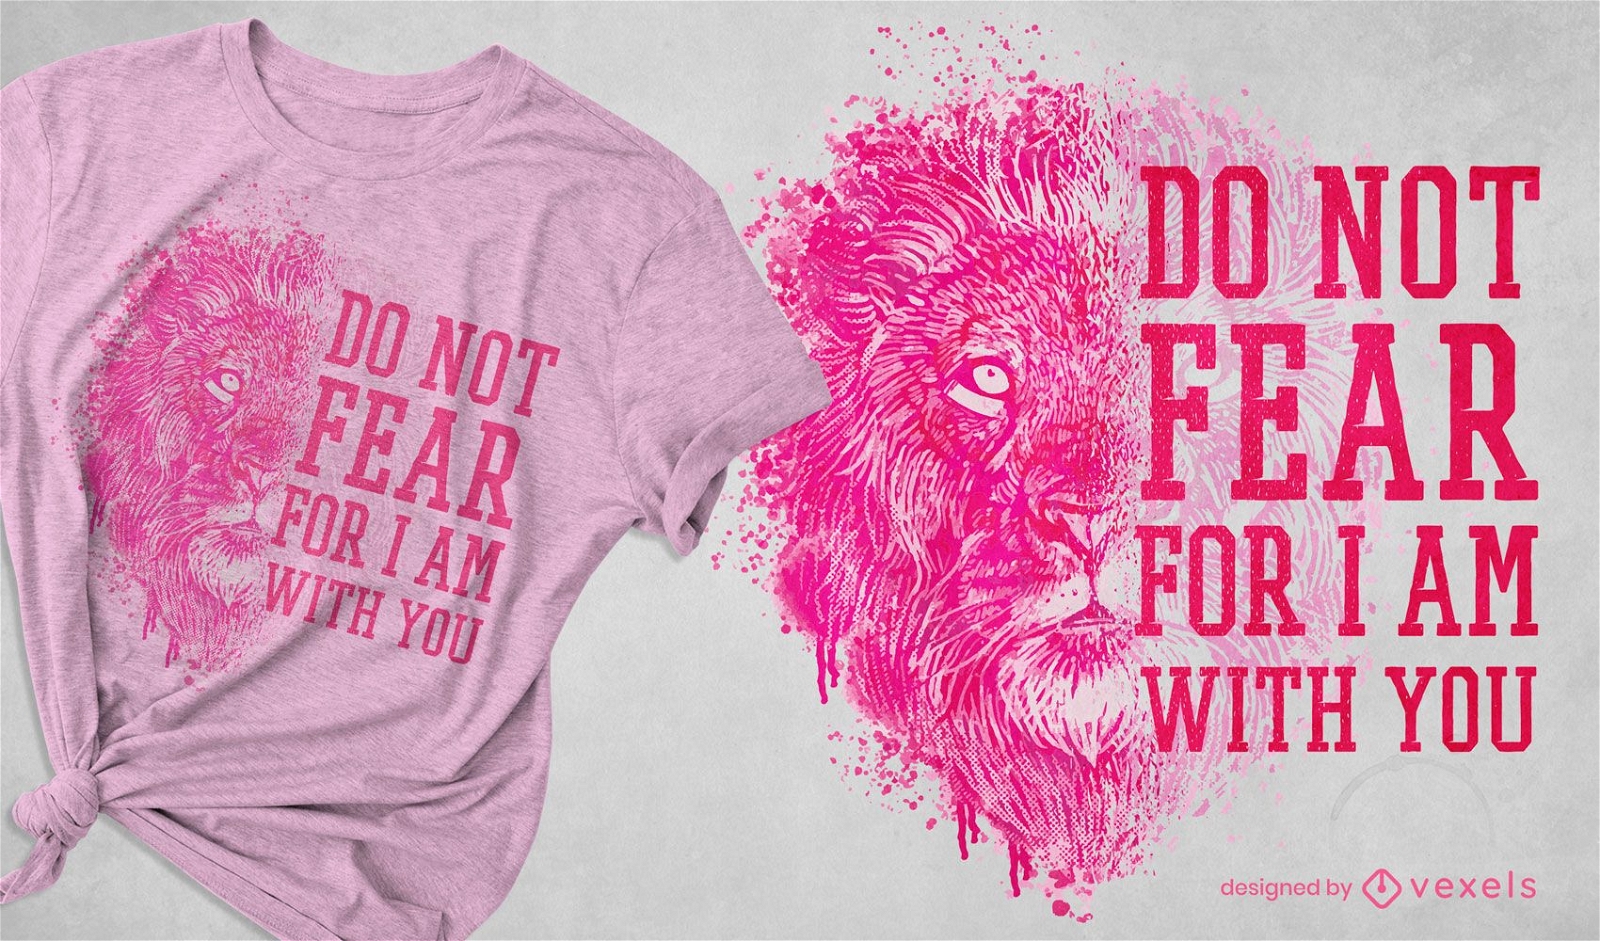 Realistic lion wild t-shirt design